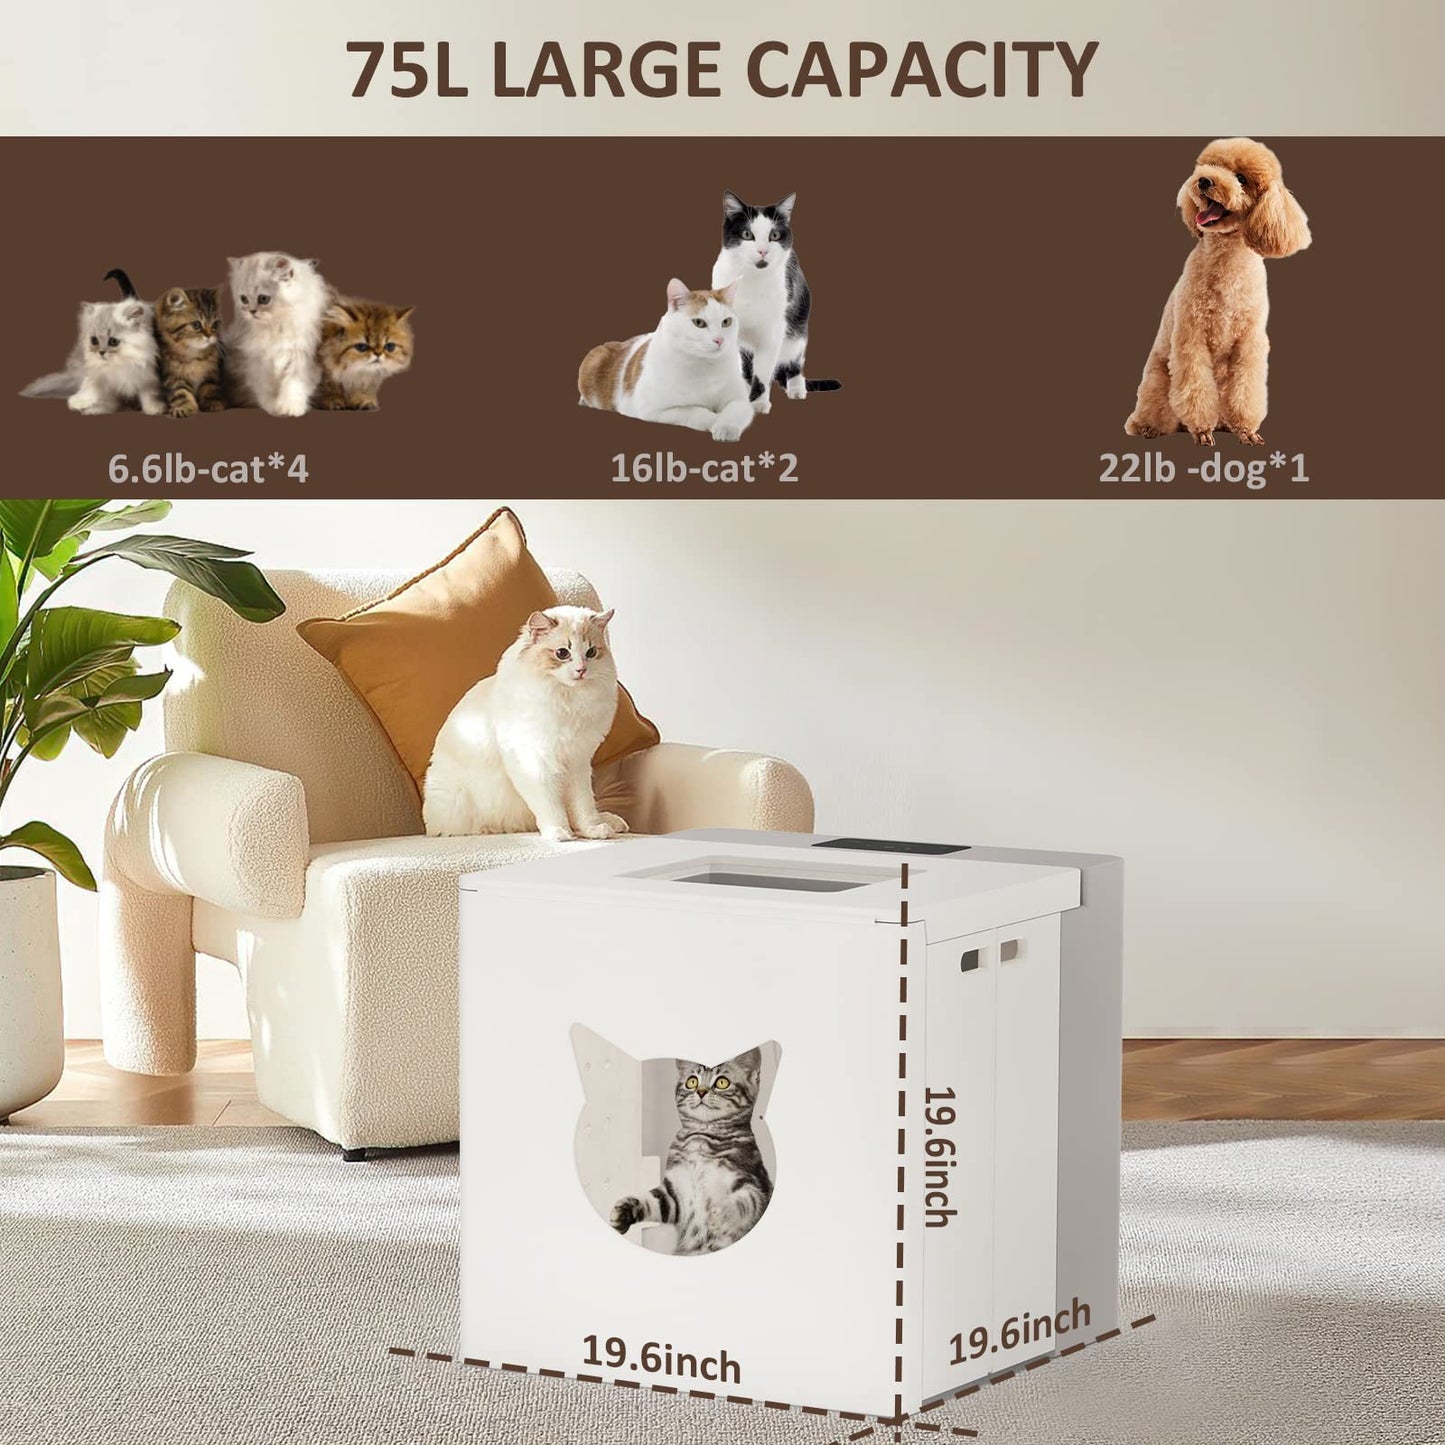 75L large capacity Automatic Pet Drying Box